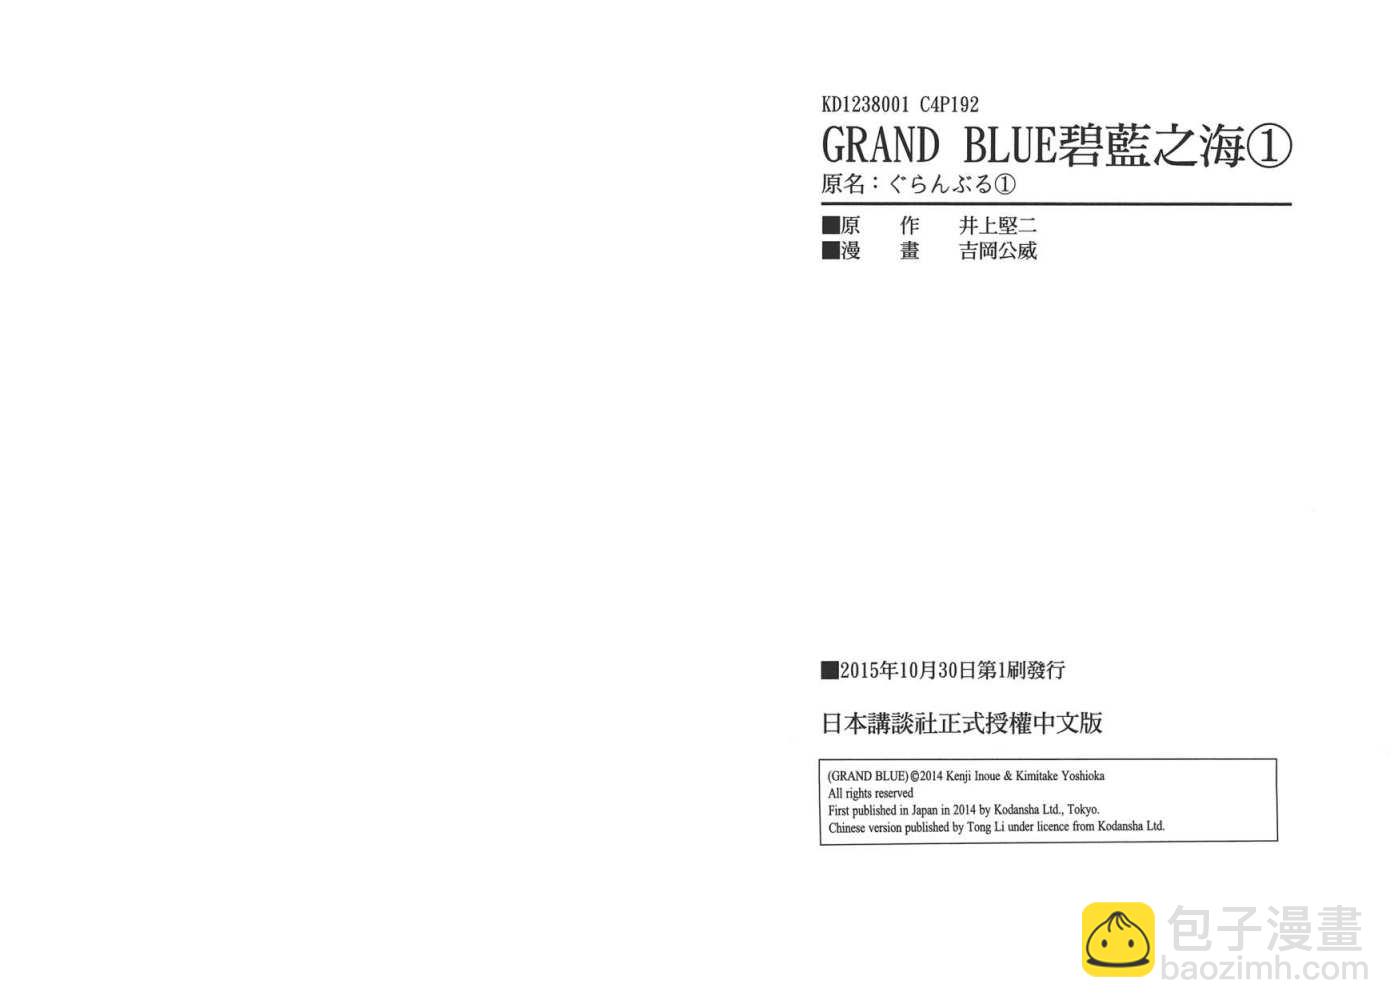 GrandBlue - 第1卷(3/3) - 1